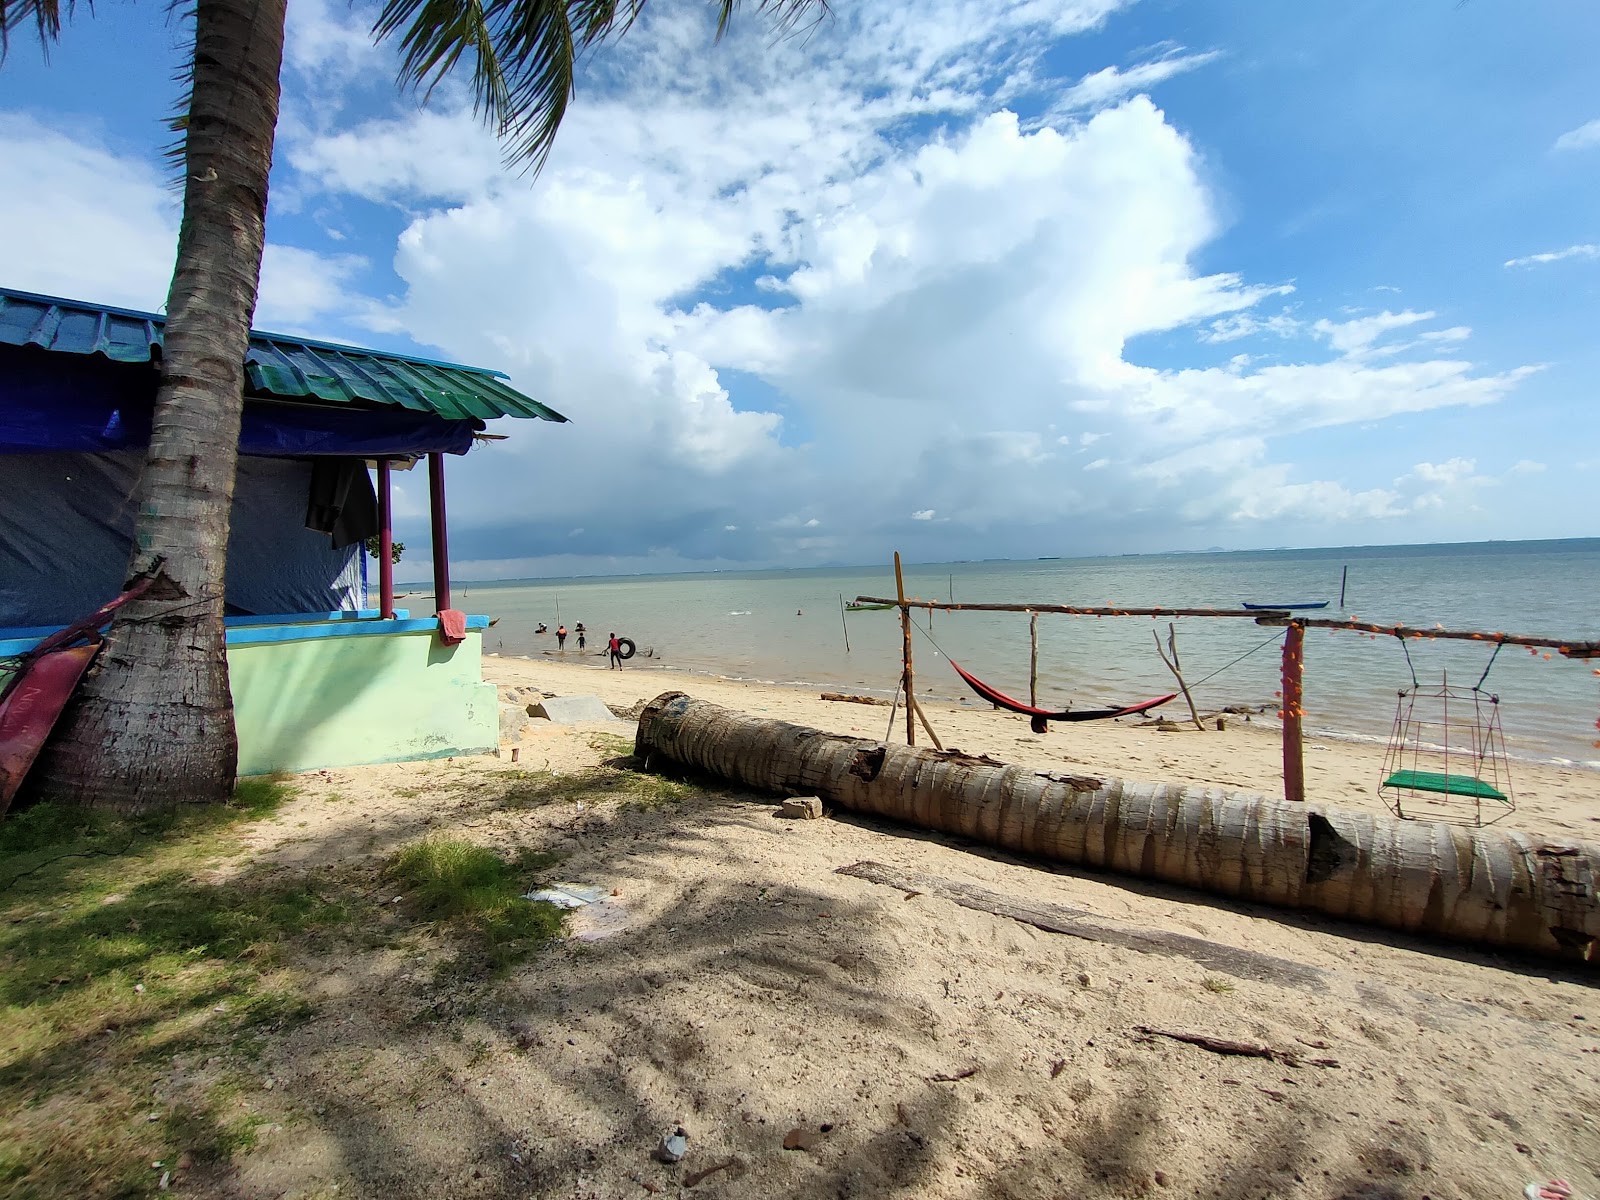 Foto de Teluk Mata Ikan Beach - lugar popular entre los conocedores del relax